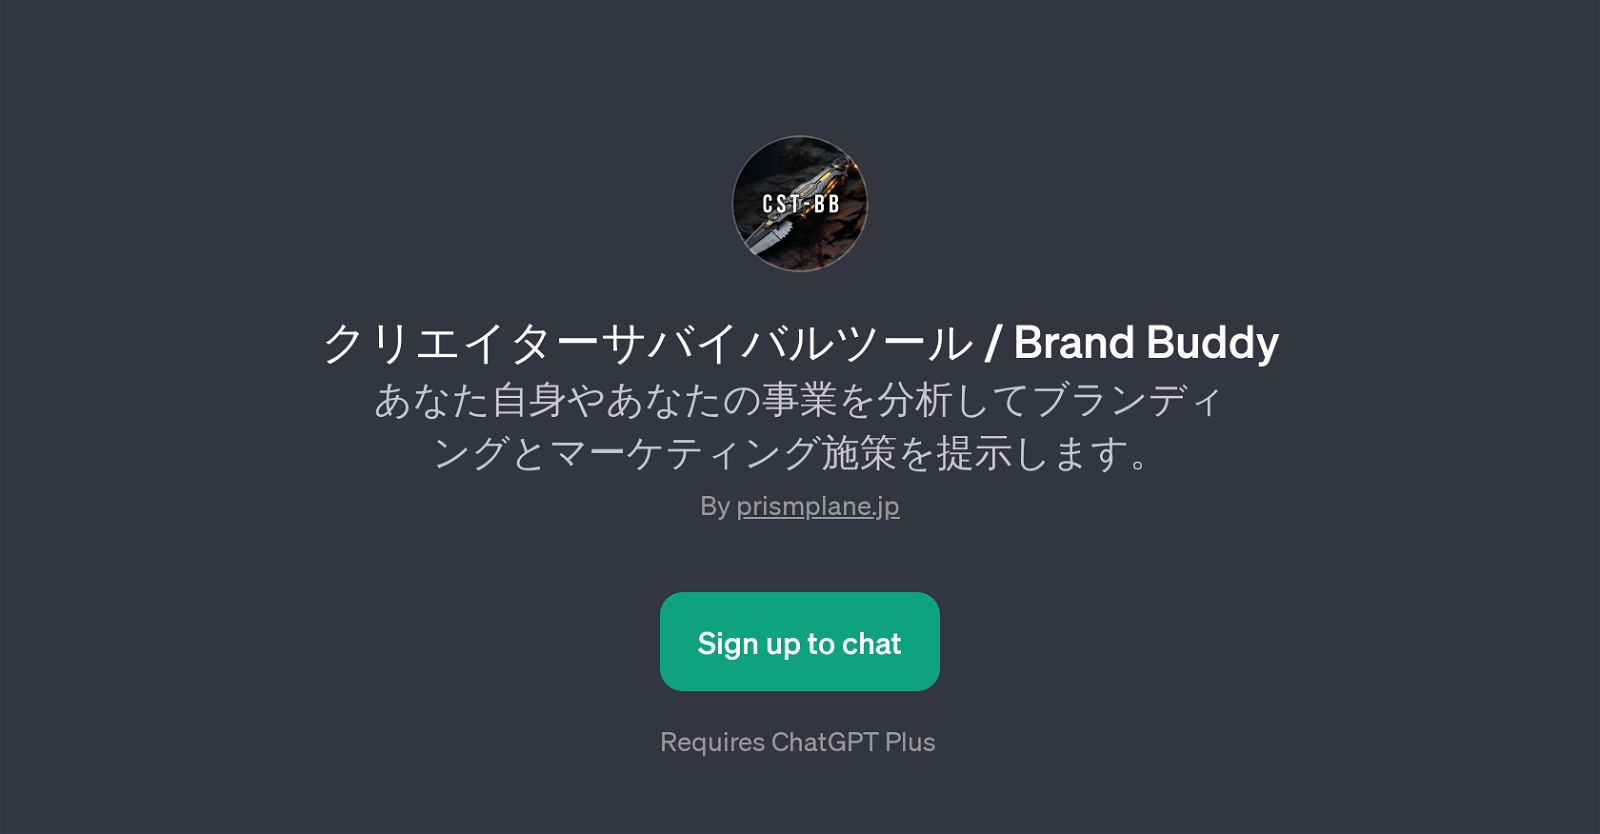 / Brand Buddy website